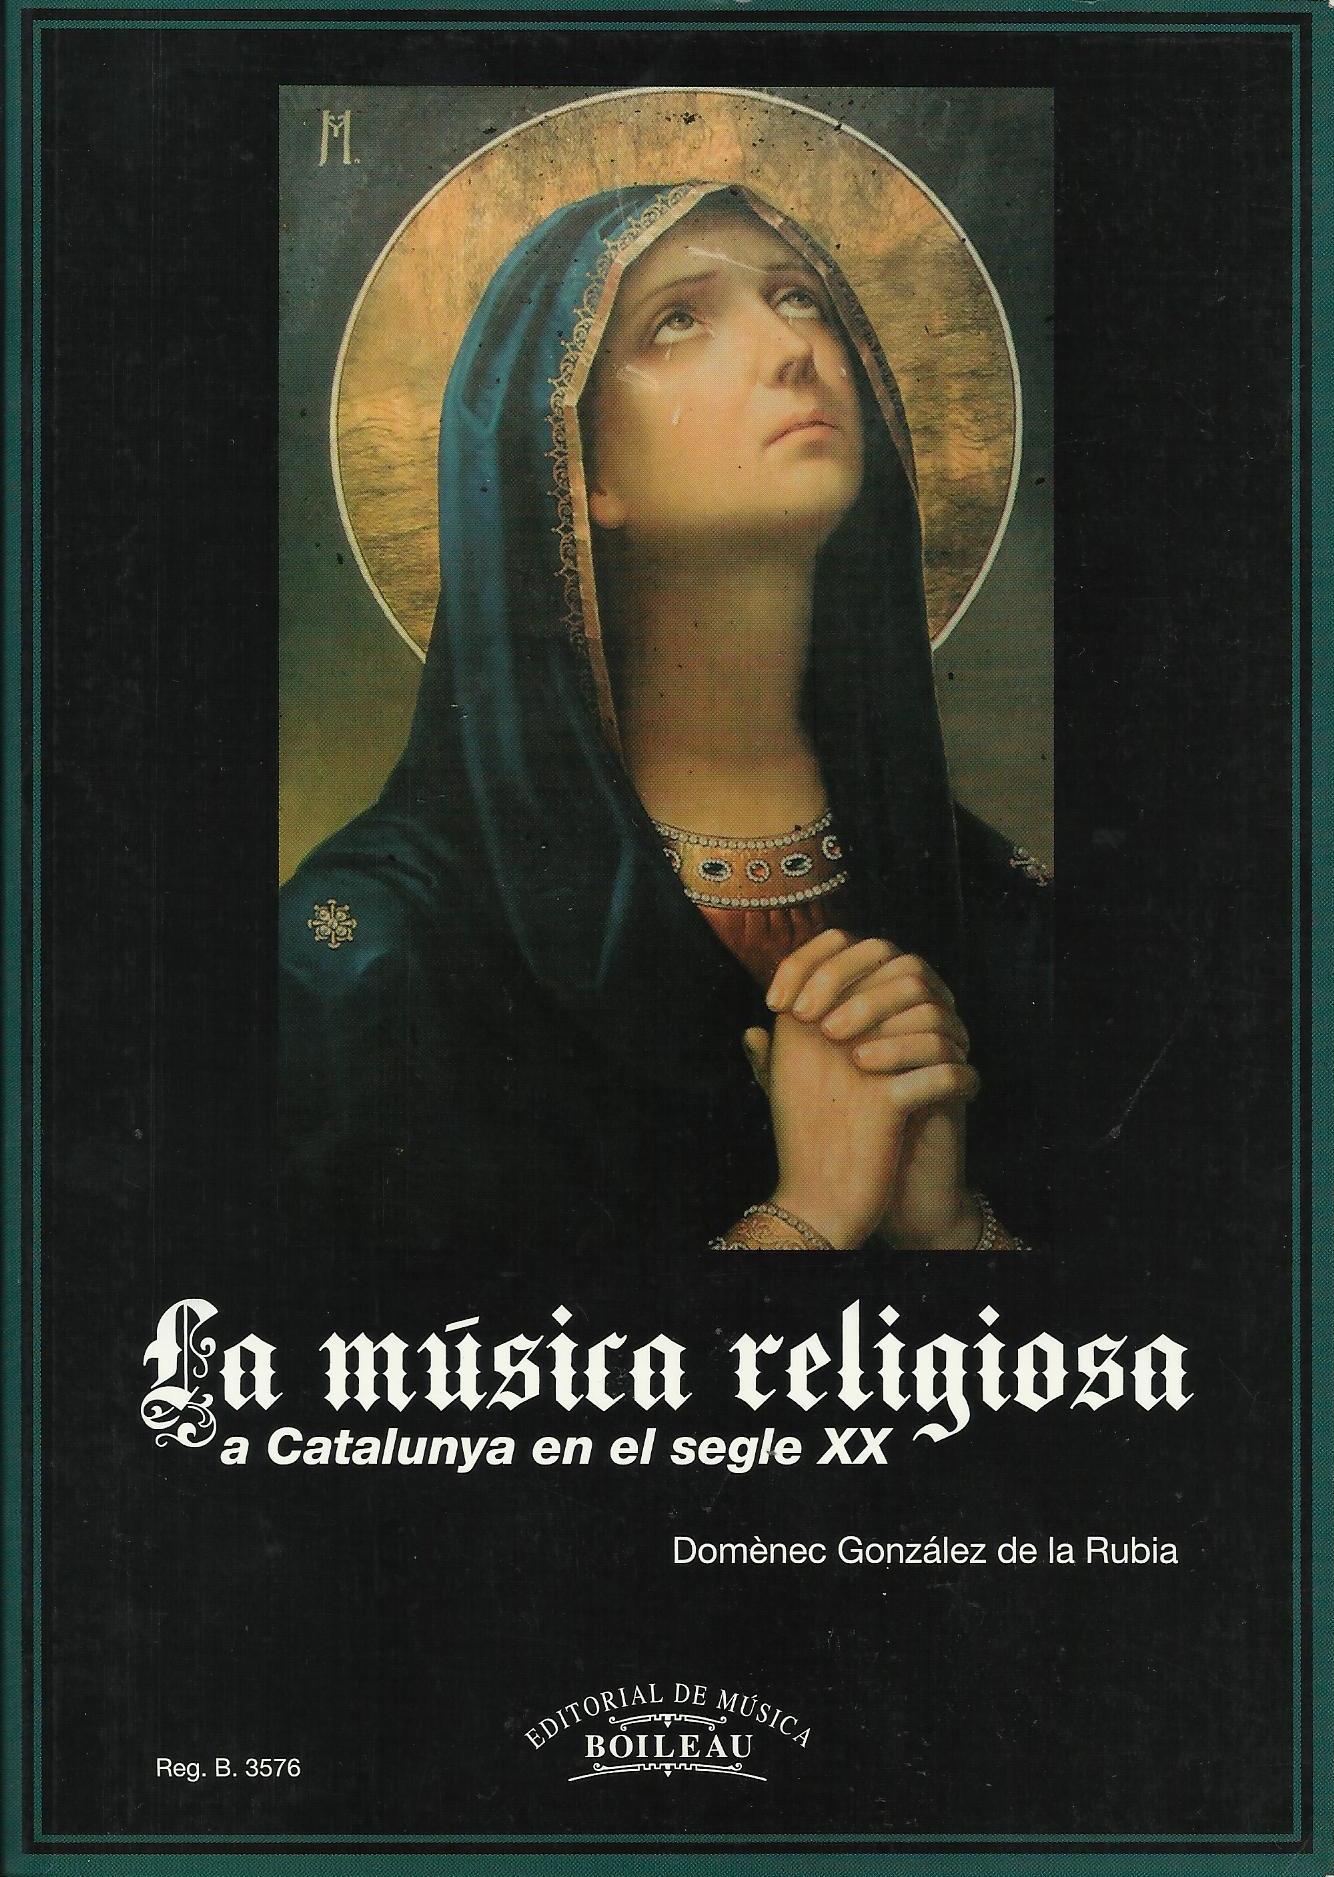 La msica religiosa a Catalunya en el segle XX